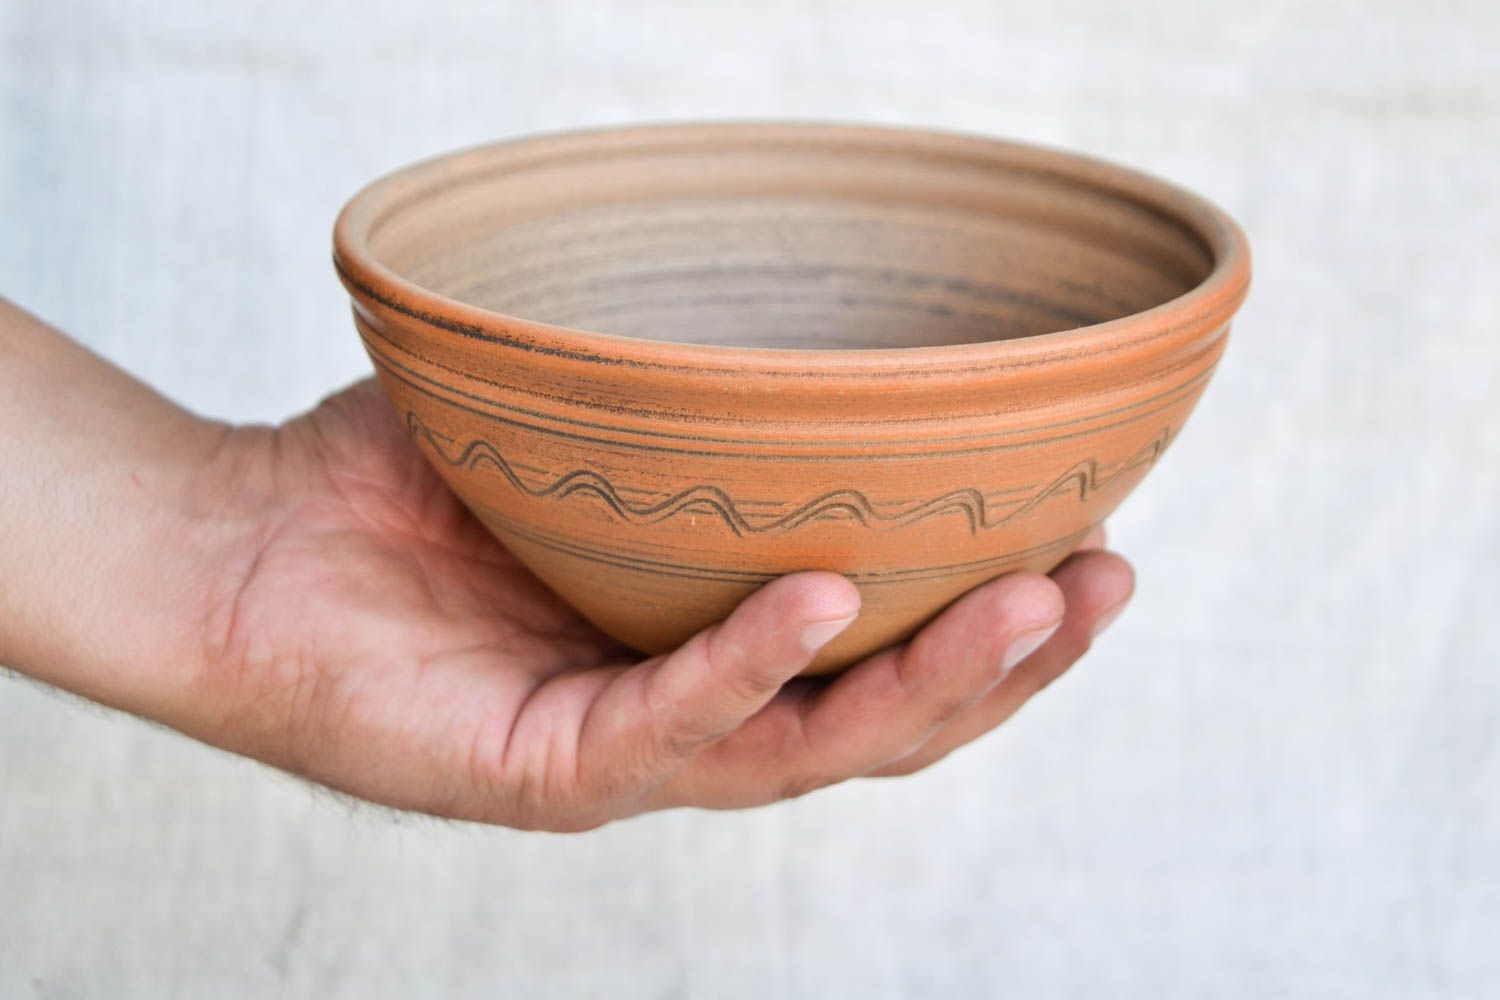 6 8 oz handmade ceramic Italian style cereal bowl 0,71 lb photo 2